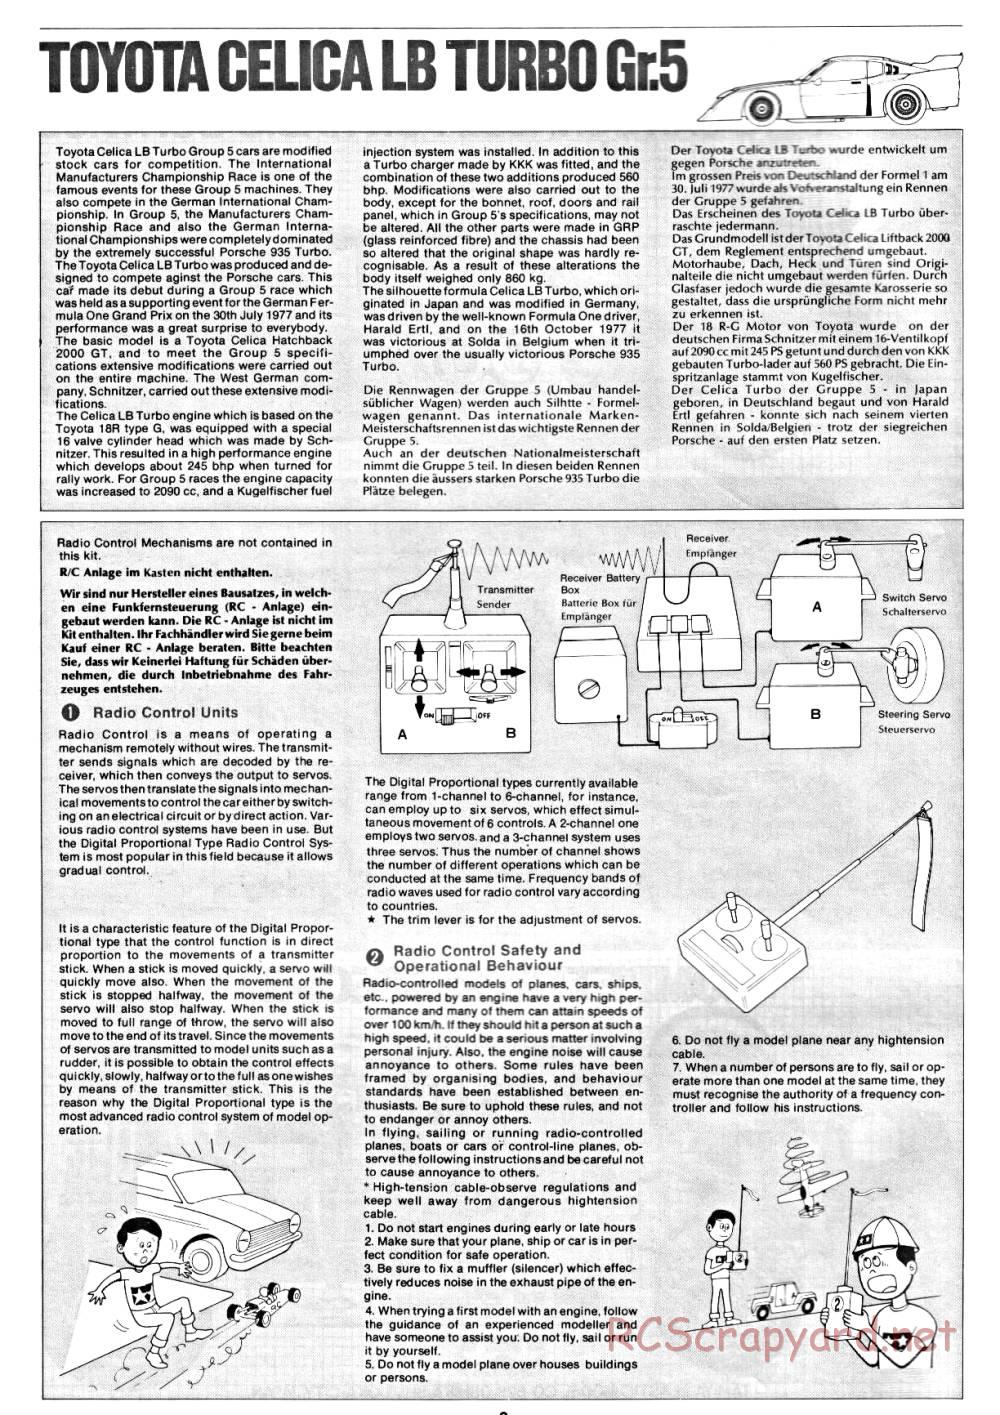 Tamiya - Toyota Celica LB Turbo Gr.5 (CS) - 58009 - Manual - Page 2